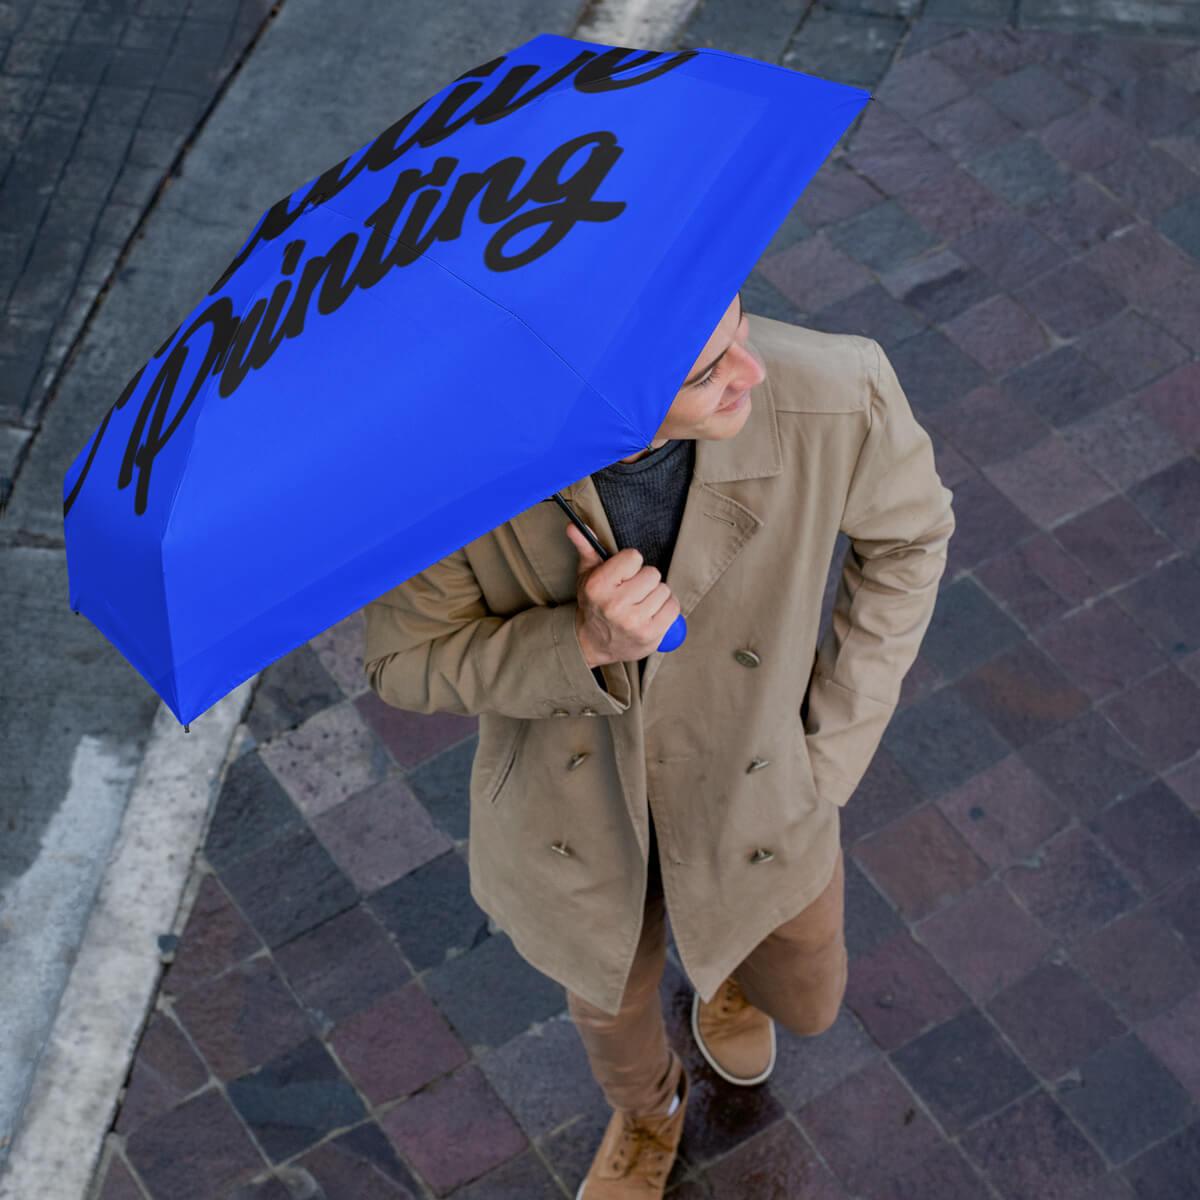 Man on street holding blue folding umbrella promotional umbrellas by curative printing